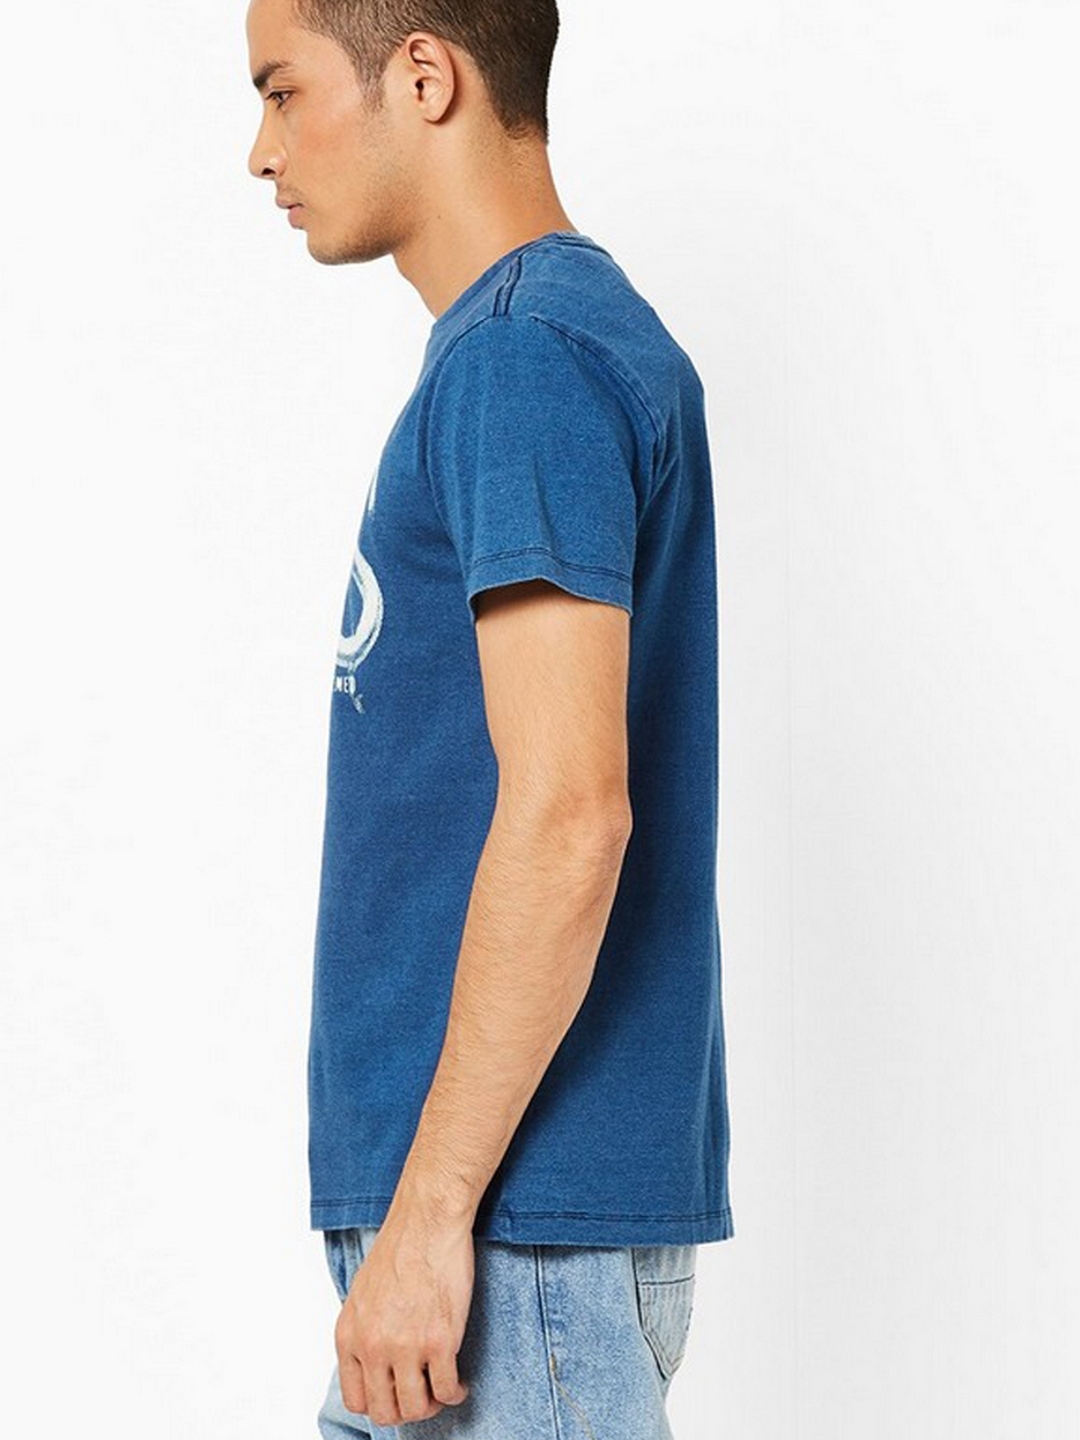 Men's Scuba printed crew neck blue t-shirt